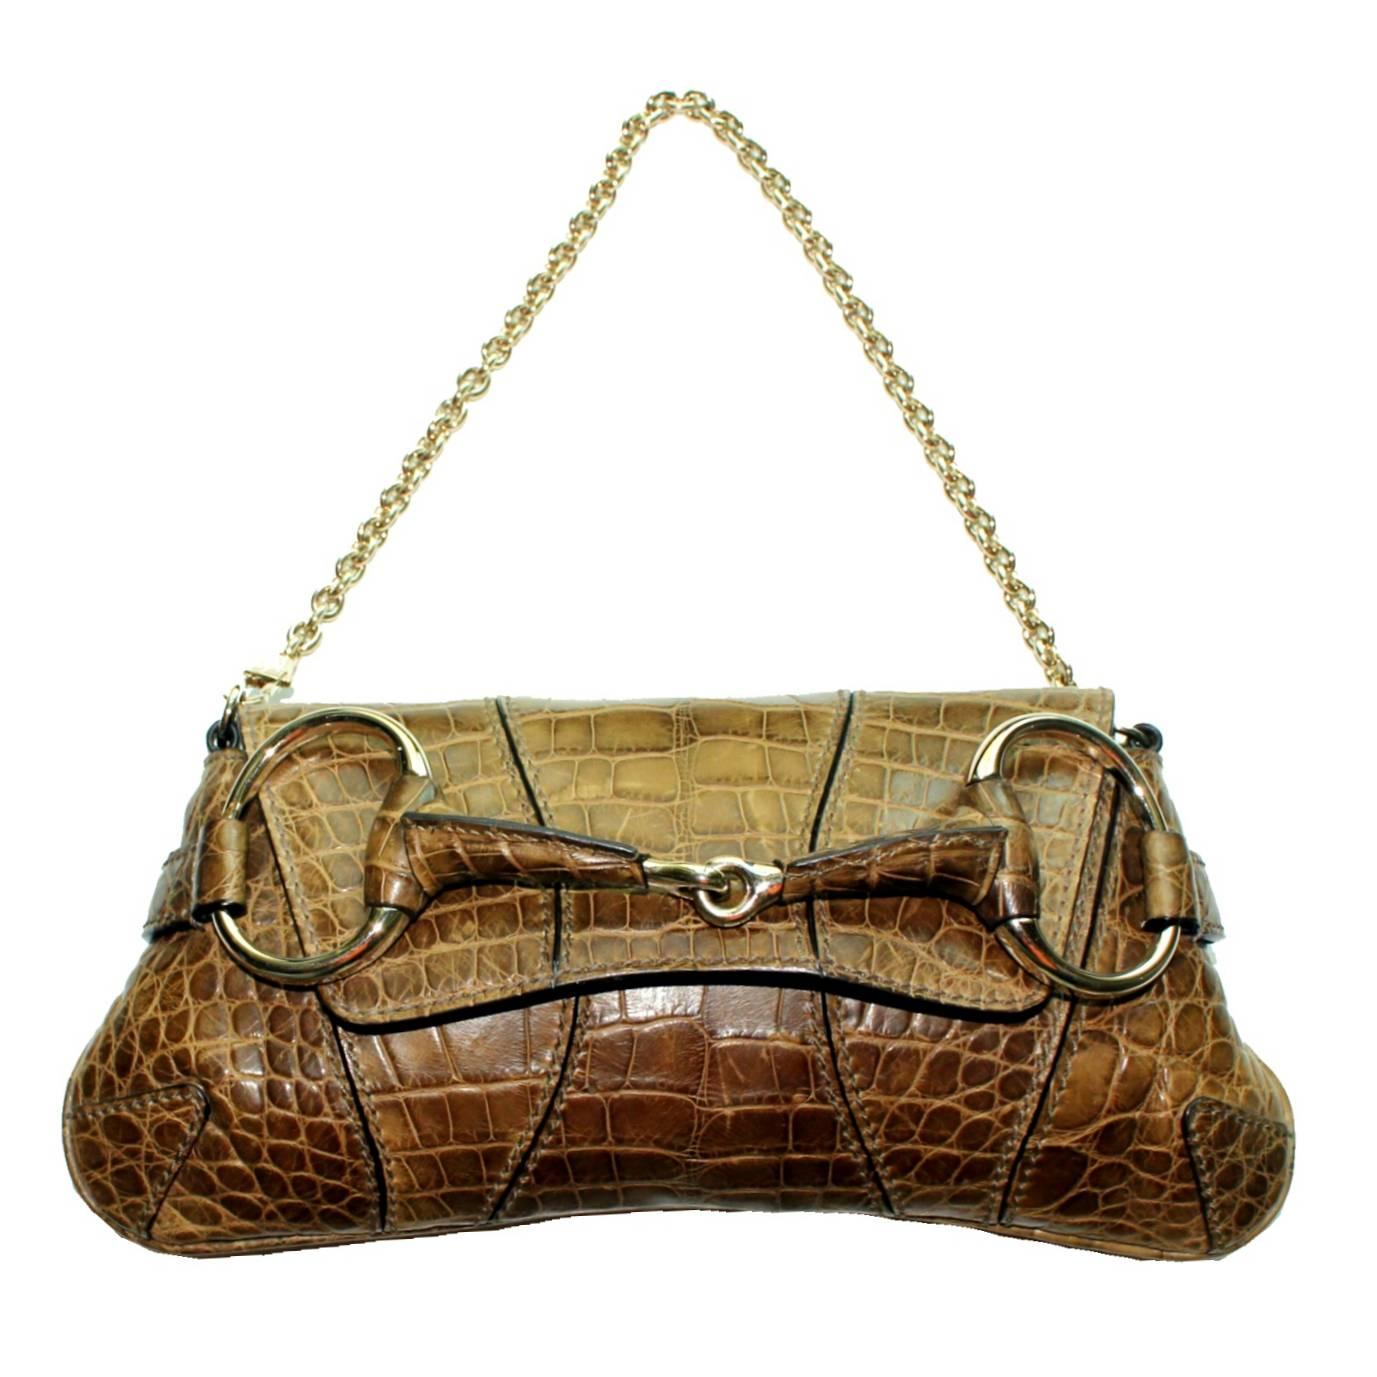 Stunning Gucci 1921 Horsebit Exotic Crocodile Sking Clutch Bag